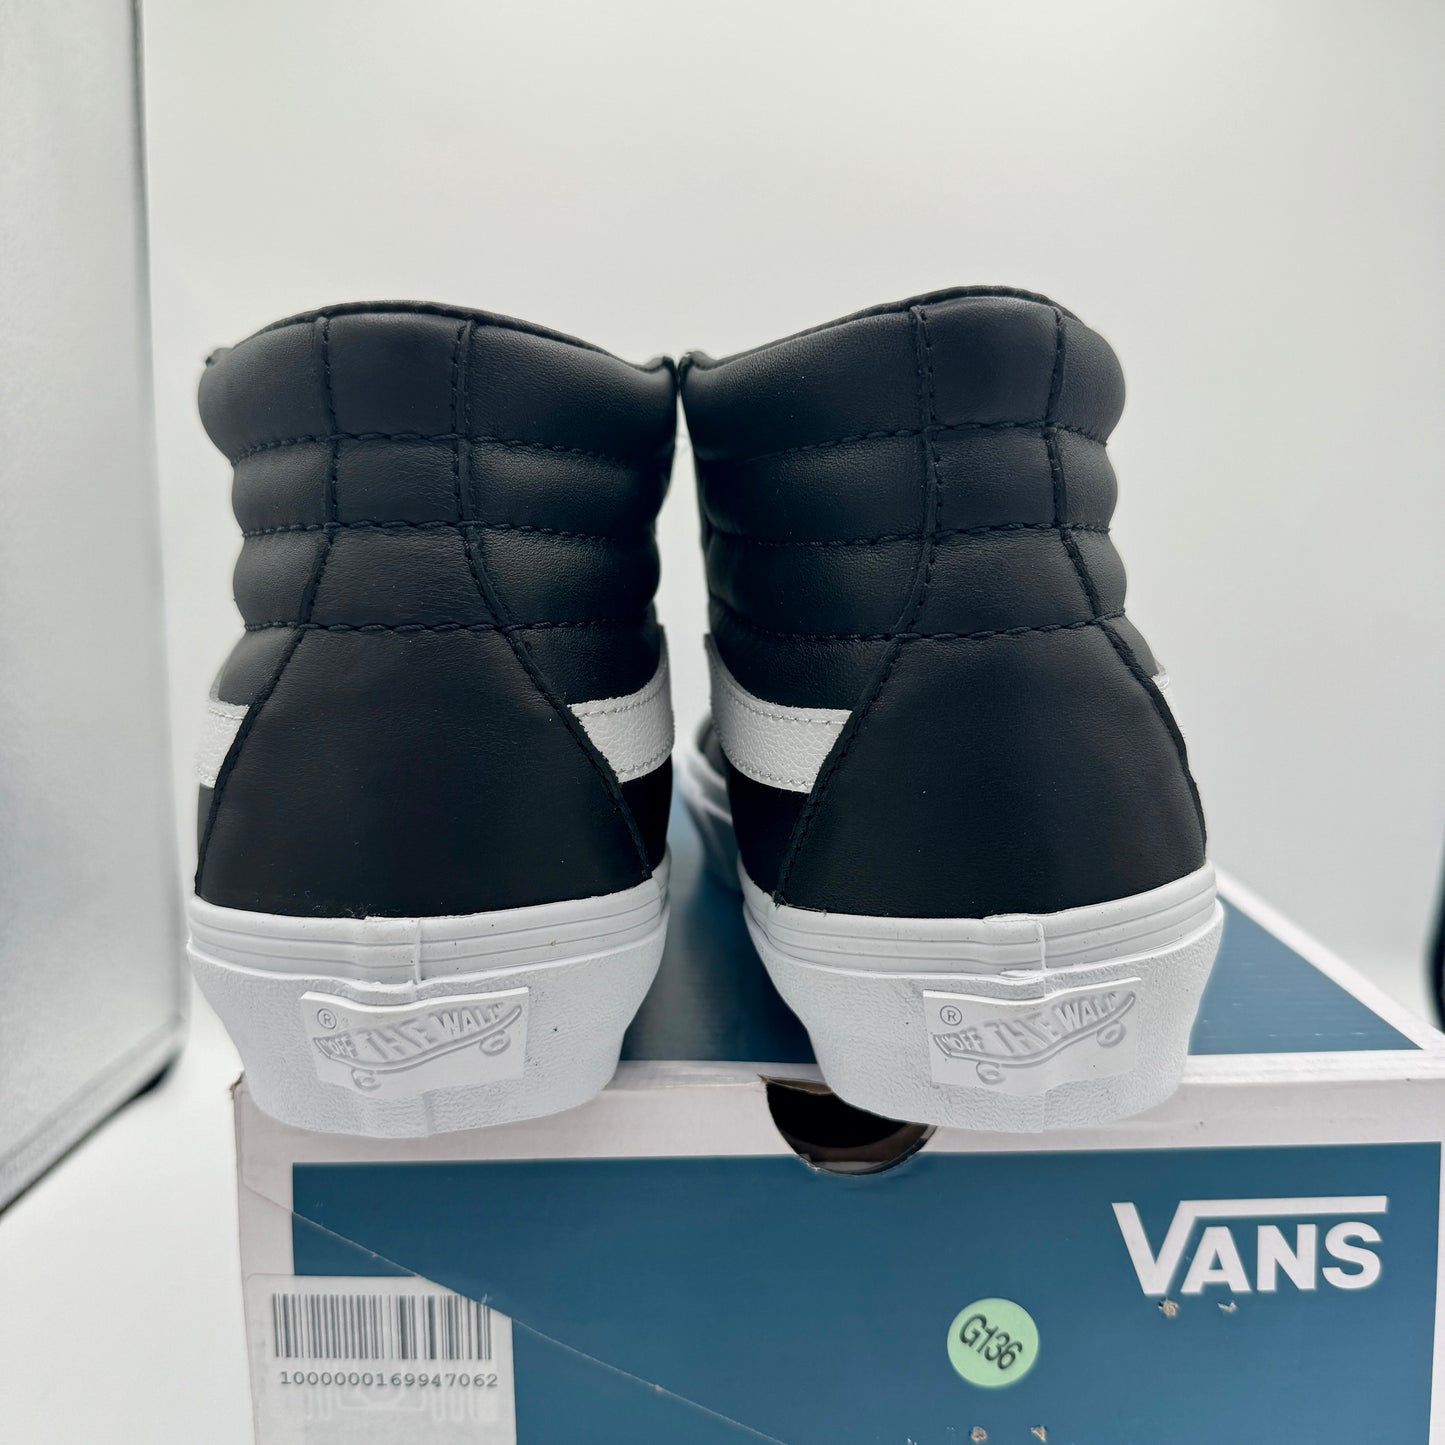 Vans Sk8 Hi Reissue VI Shoes Black Dream Leather High Top Sneakers Vault NEW